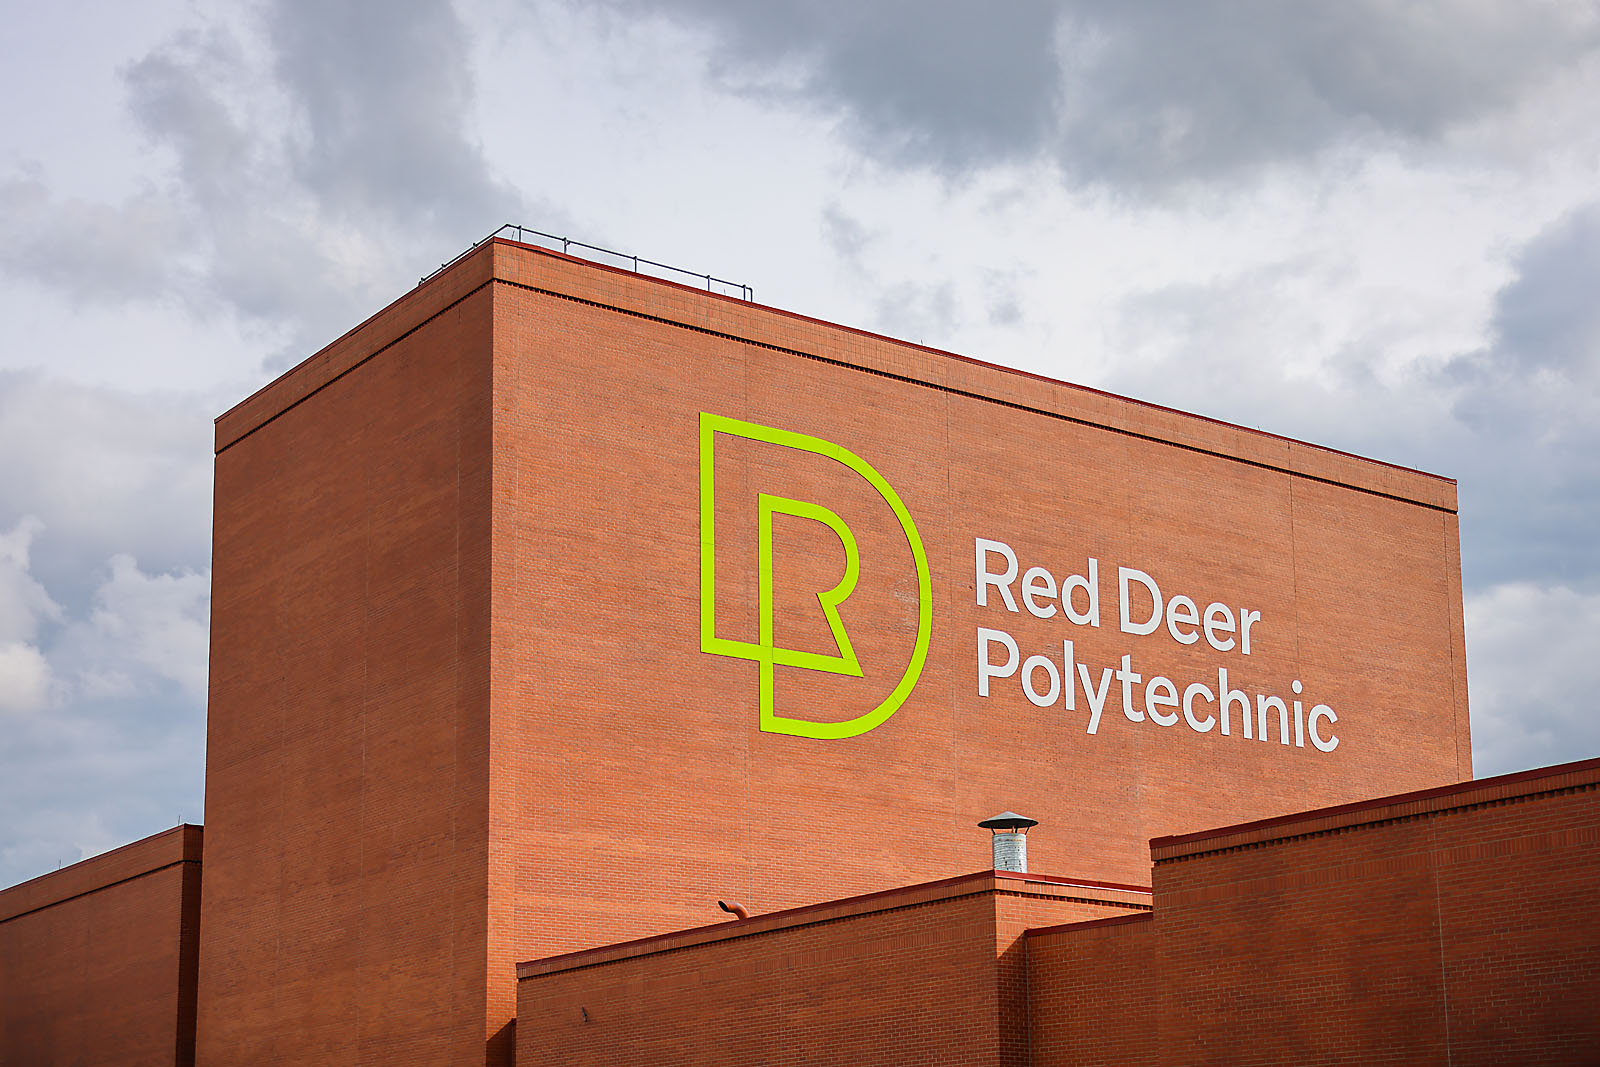 red deer polytechnic commercial photographer sergei belski photo